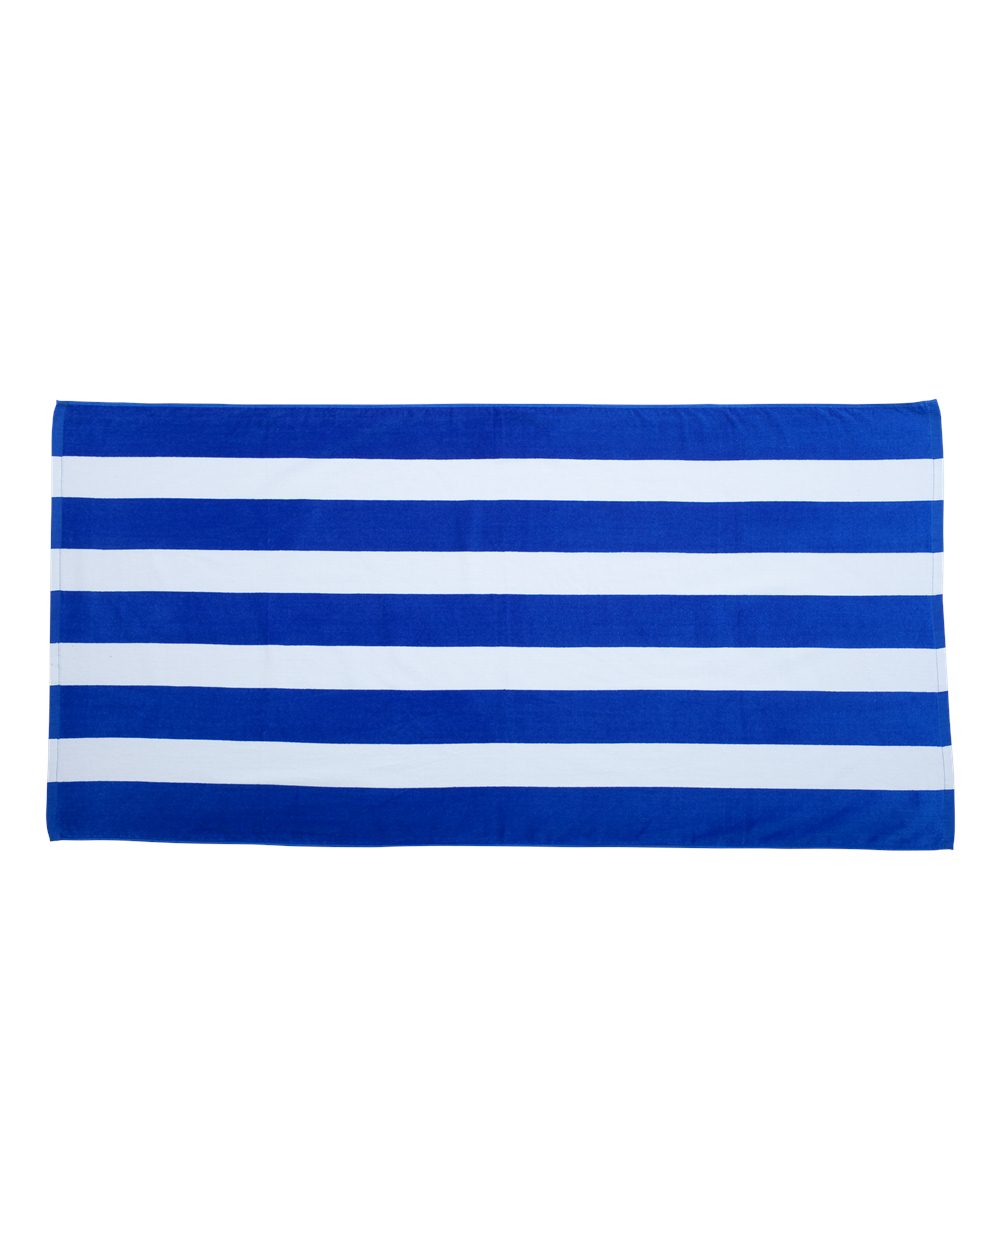 Carmel Towel Company 3060S - Cabana Stripe Velour Beach Towel